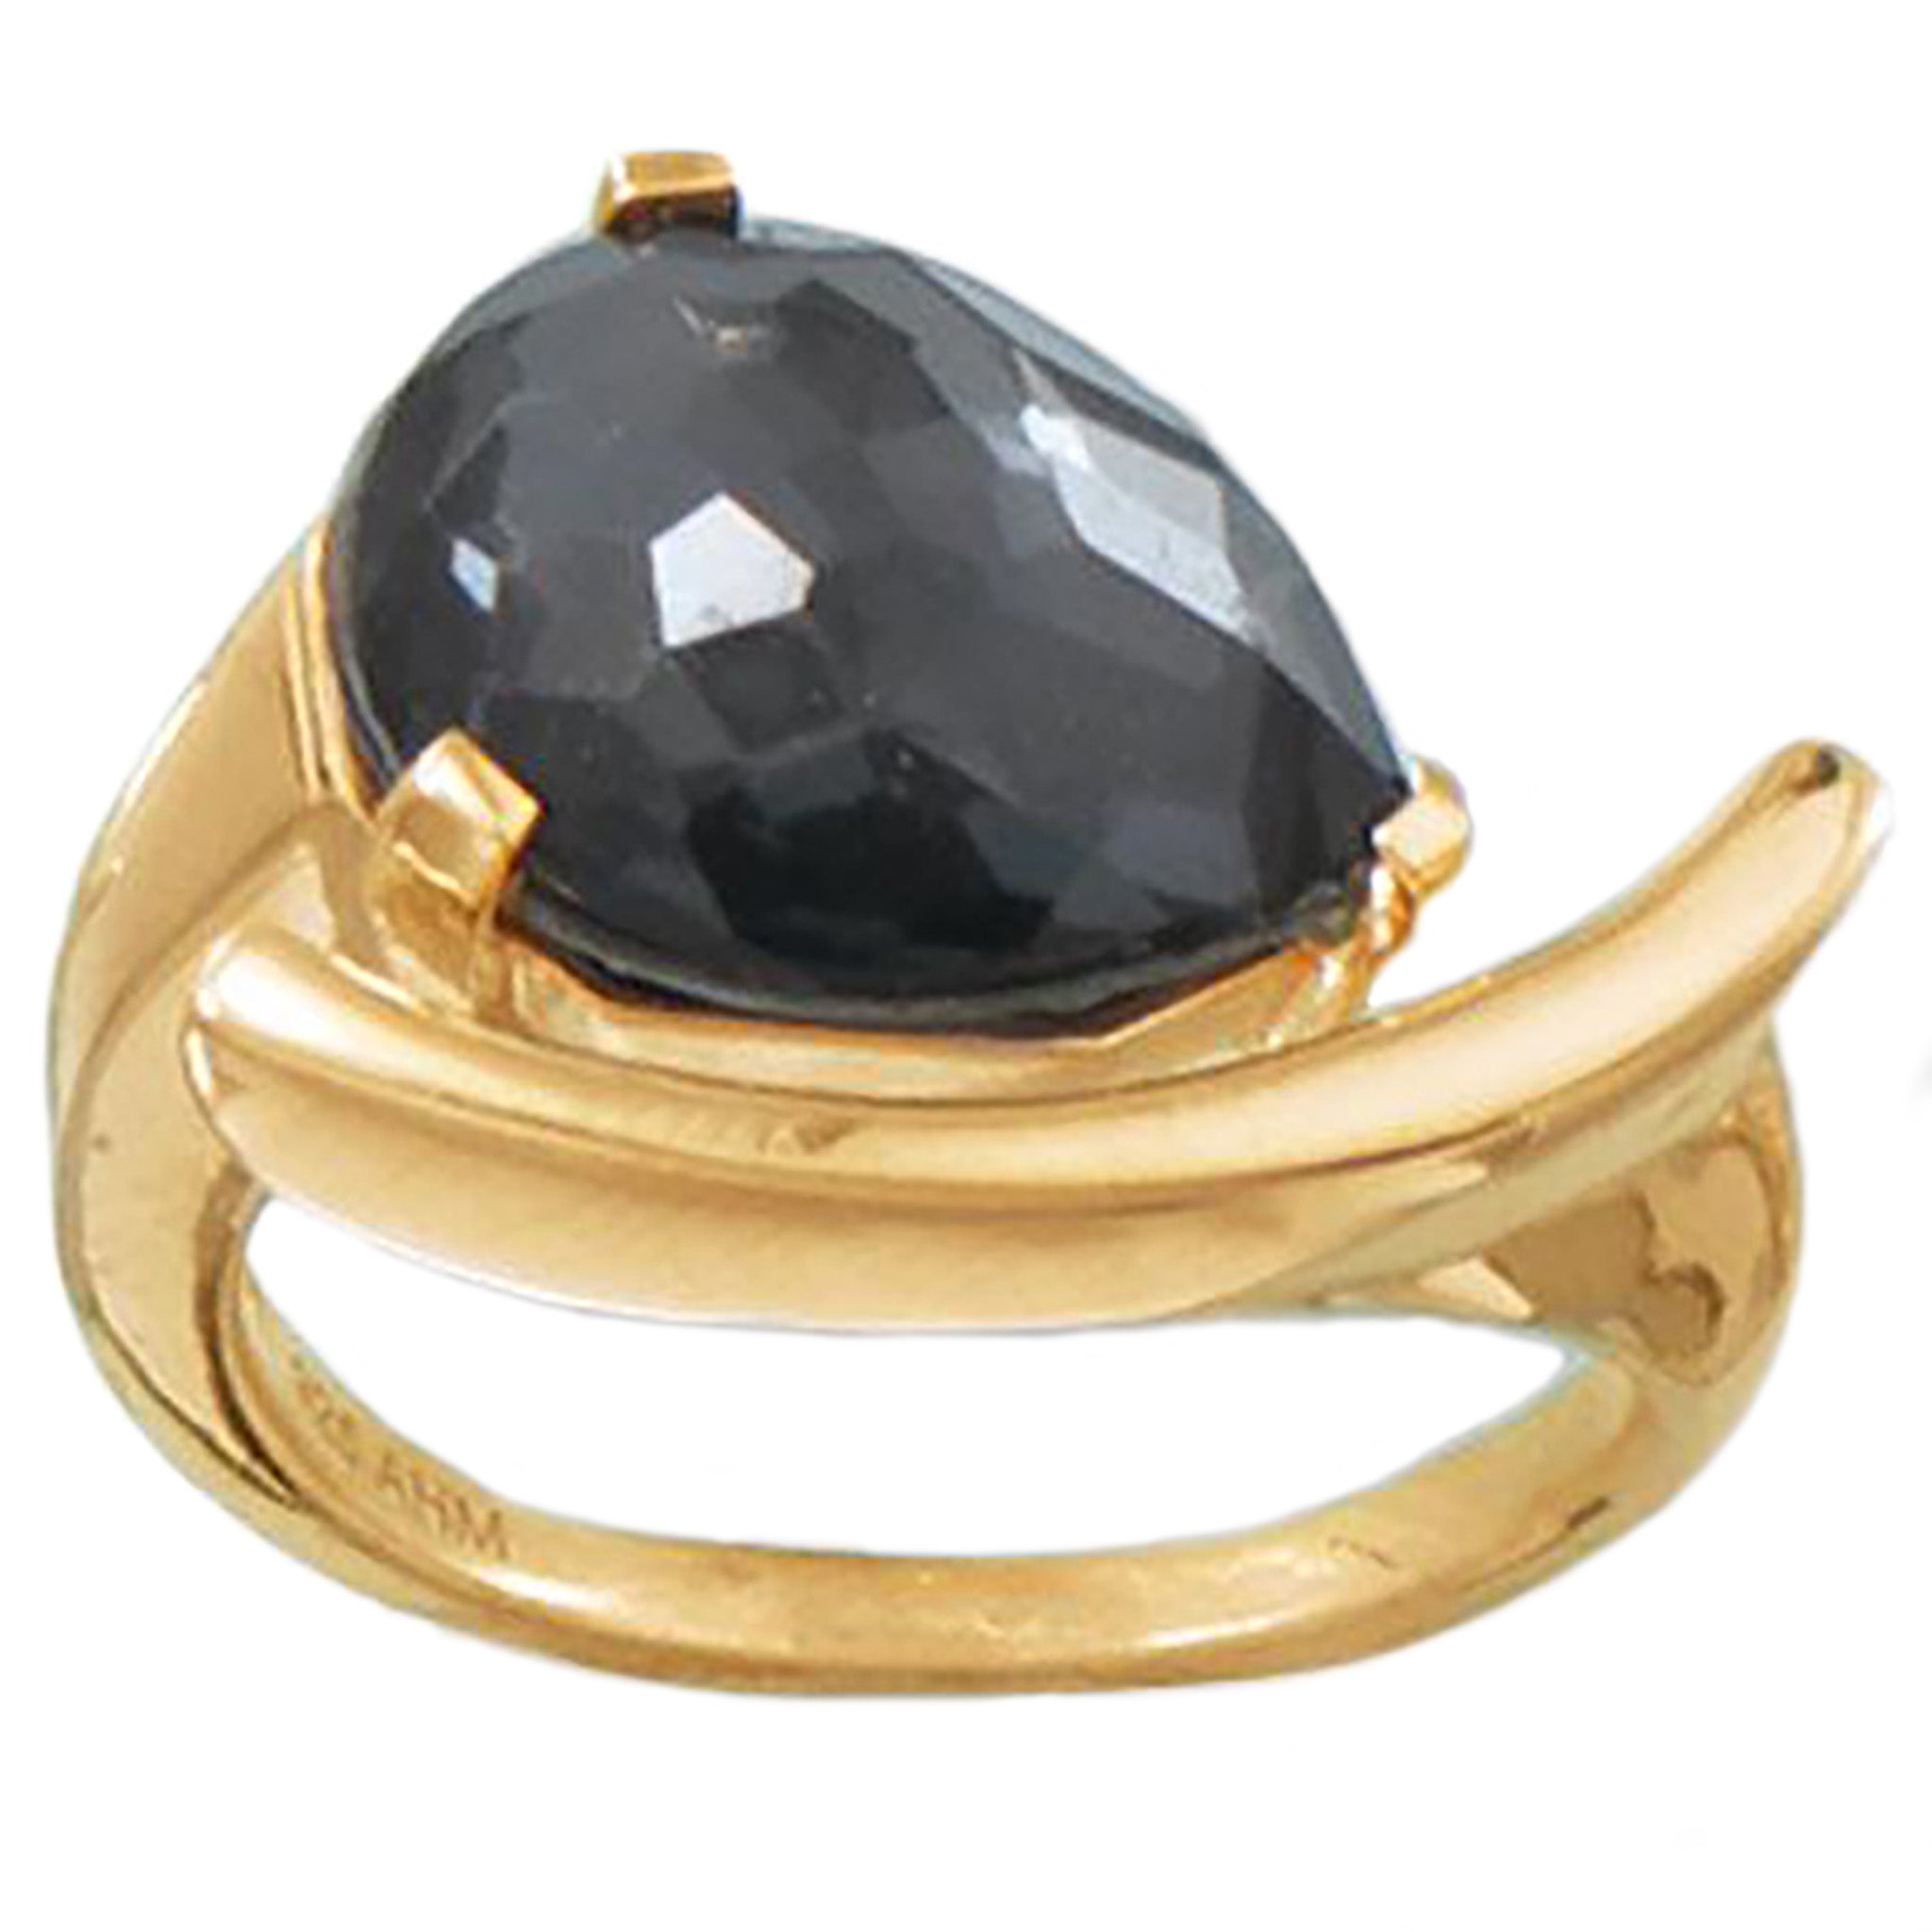 Hematite and Quartz Doublet Gold Ring